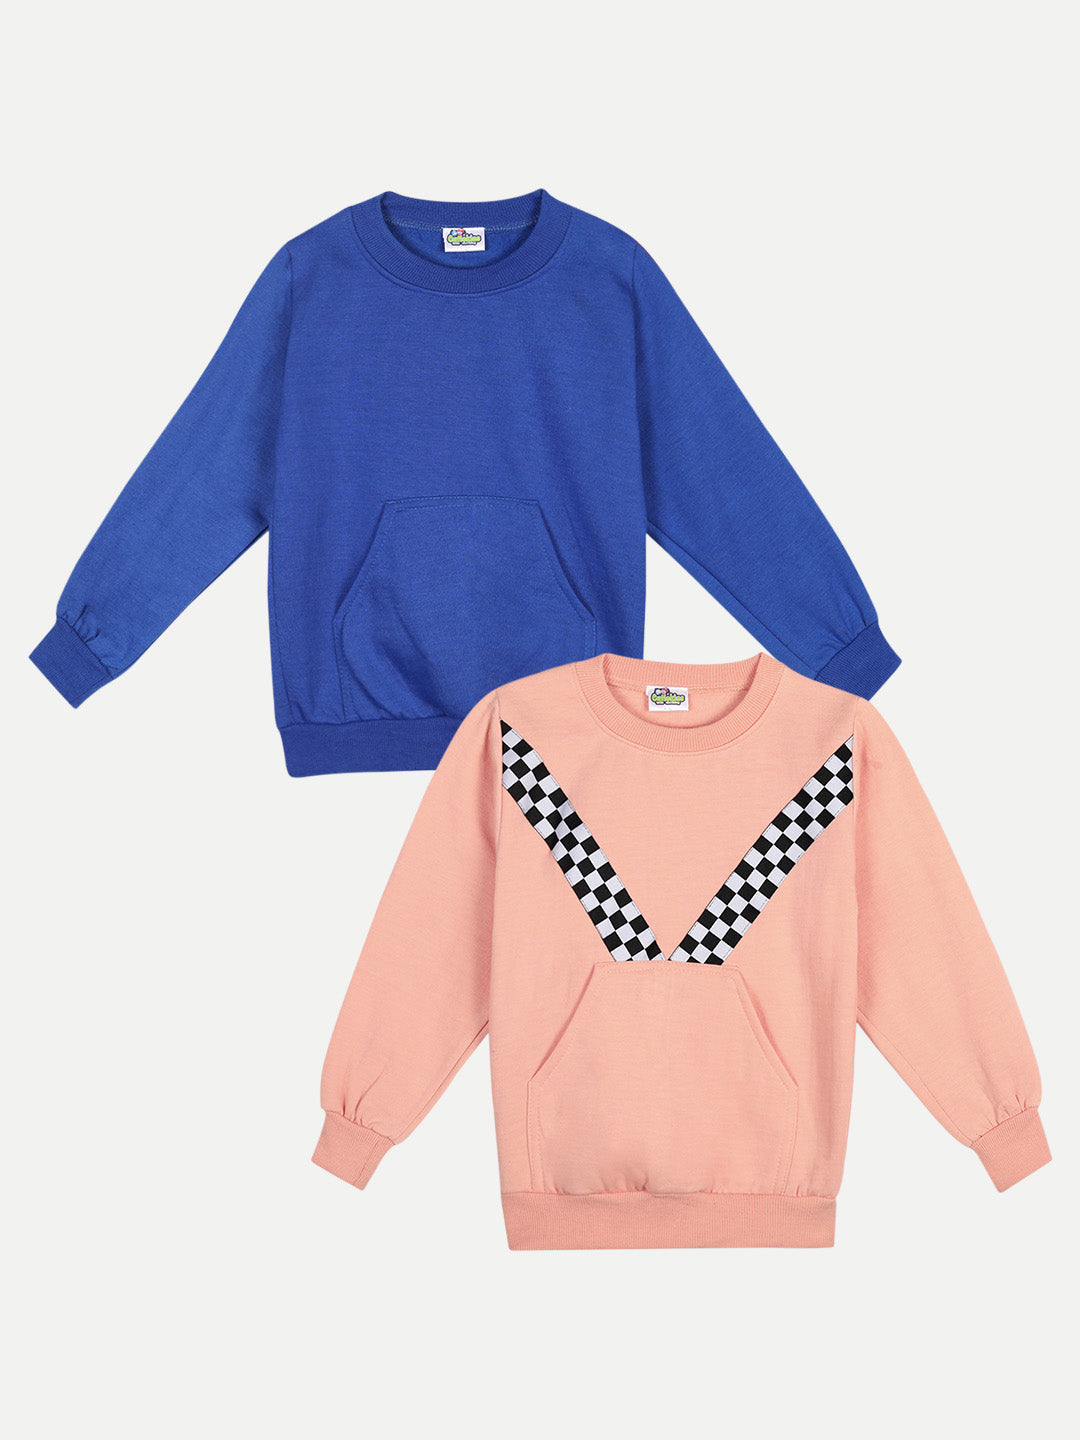 Cutiekins Pack of 2 Sweatshirt-Royal Blue & Peach